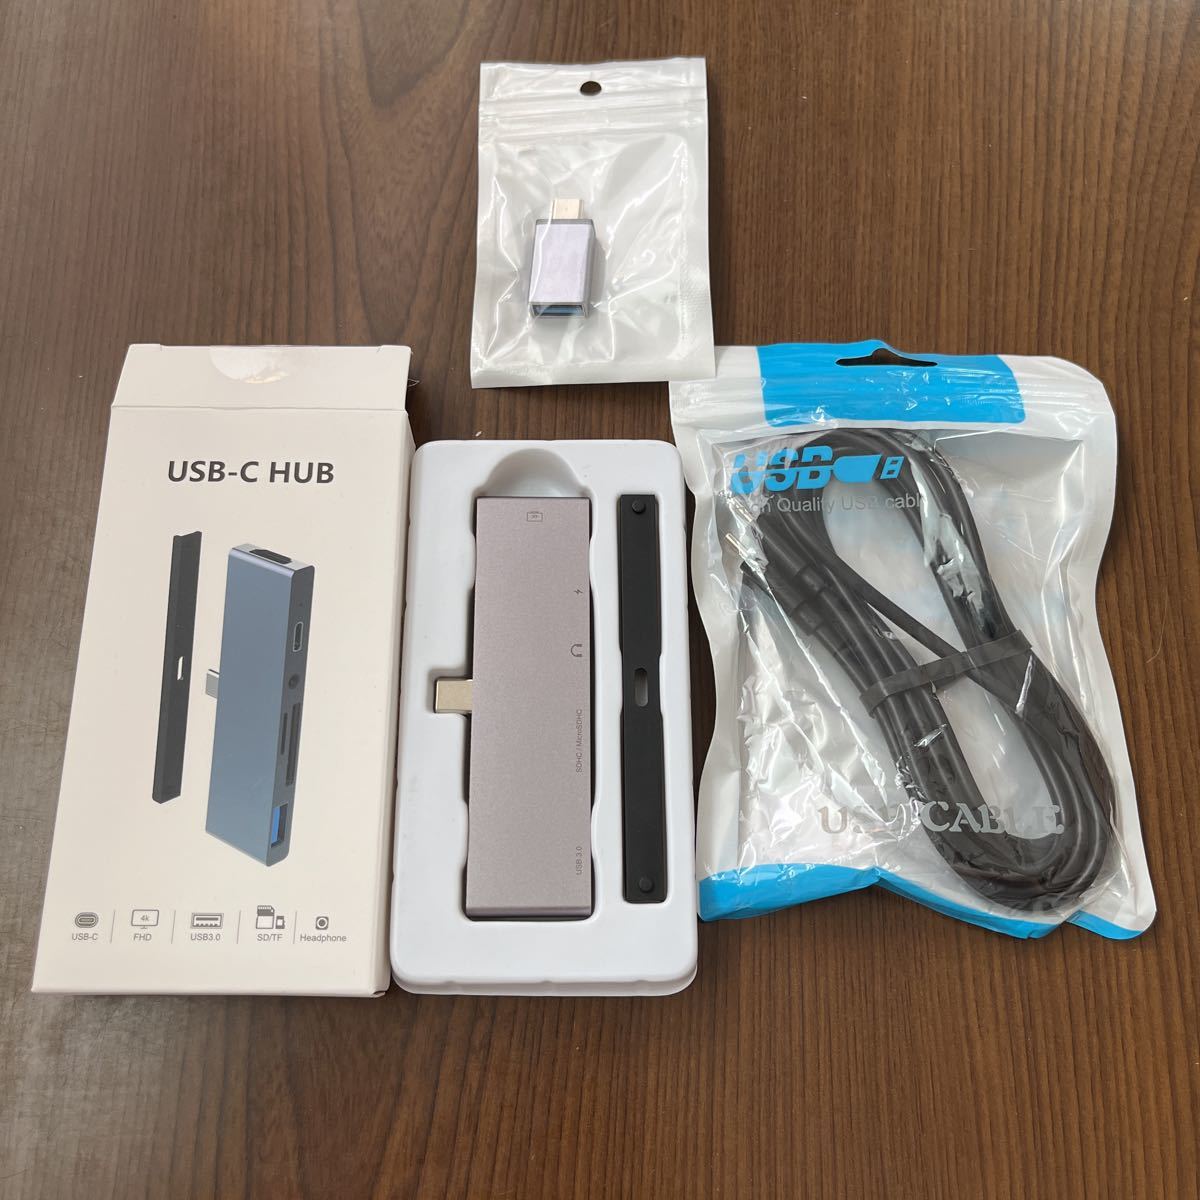 507a1424☆ Colorii iPad Pro 6in1 USB-C Hub【4K HDMI/microSD ・ SD カードリーダー/USB-A / 3.5mm イヤホンジャック_画像1